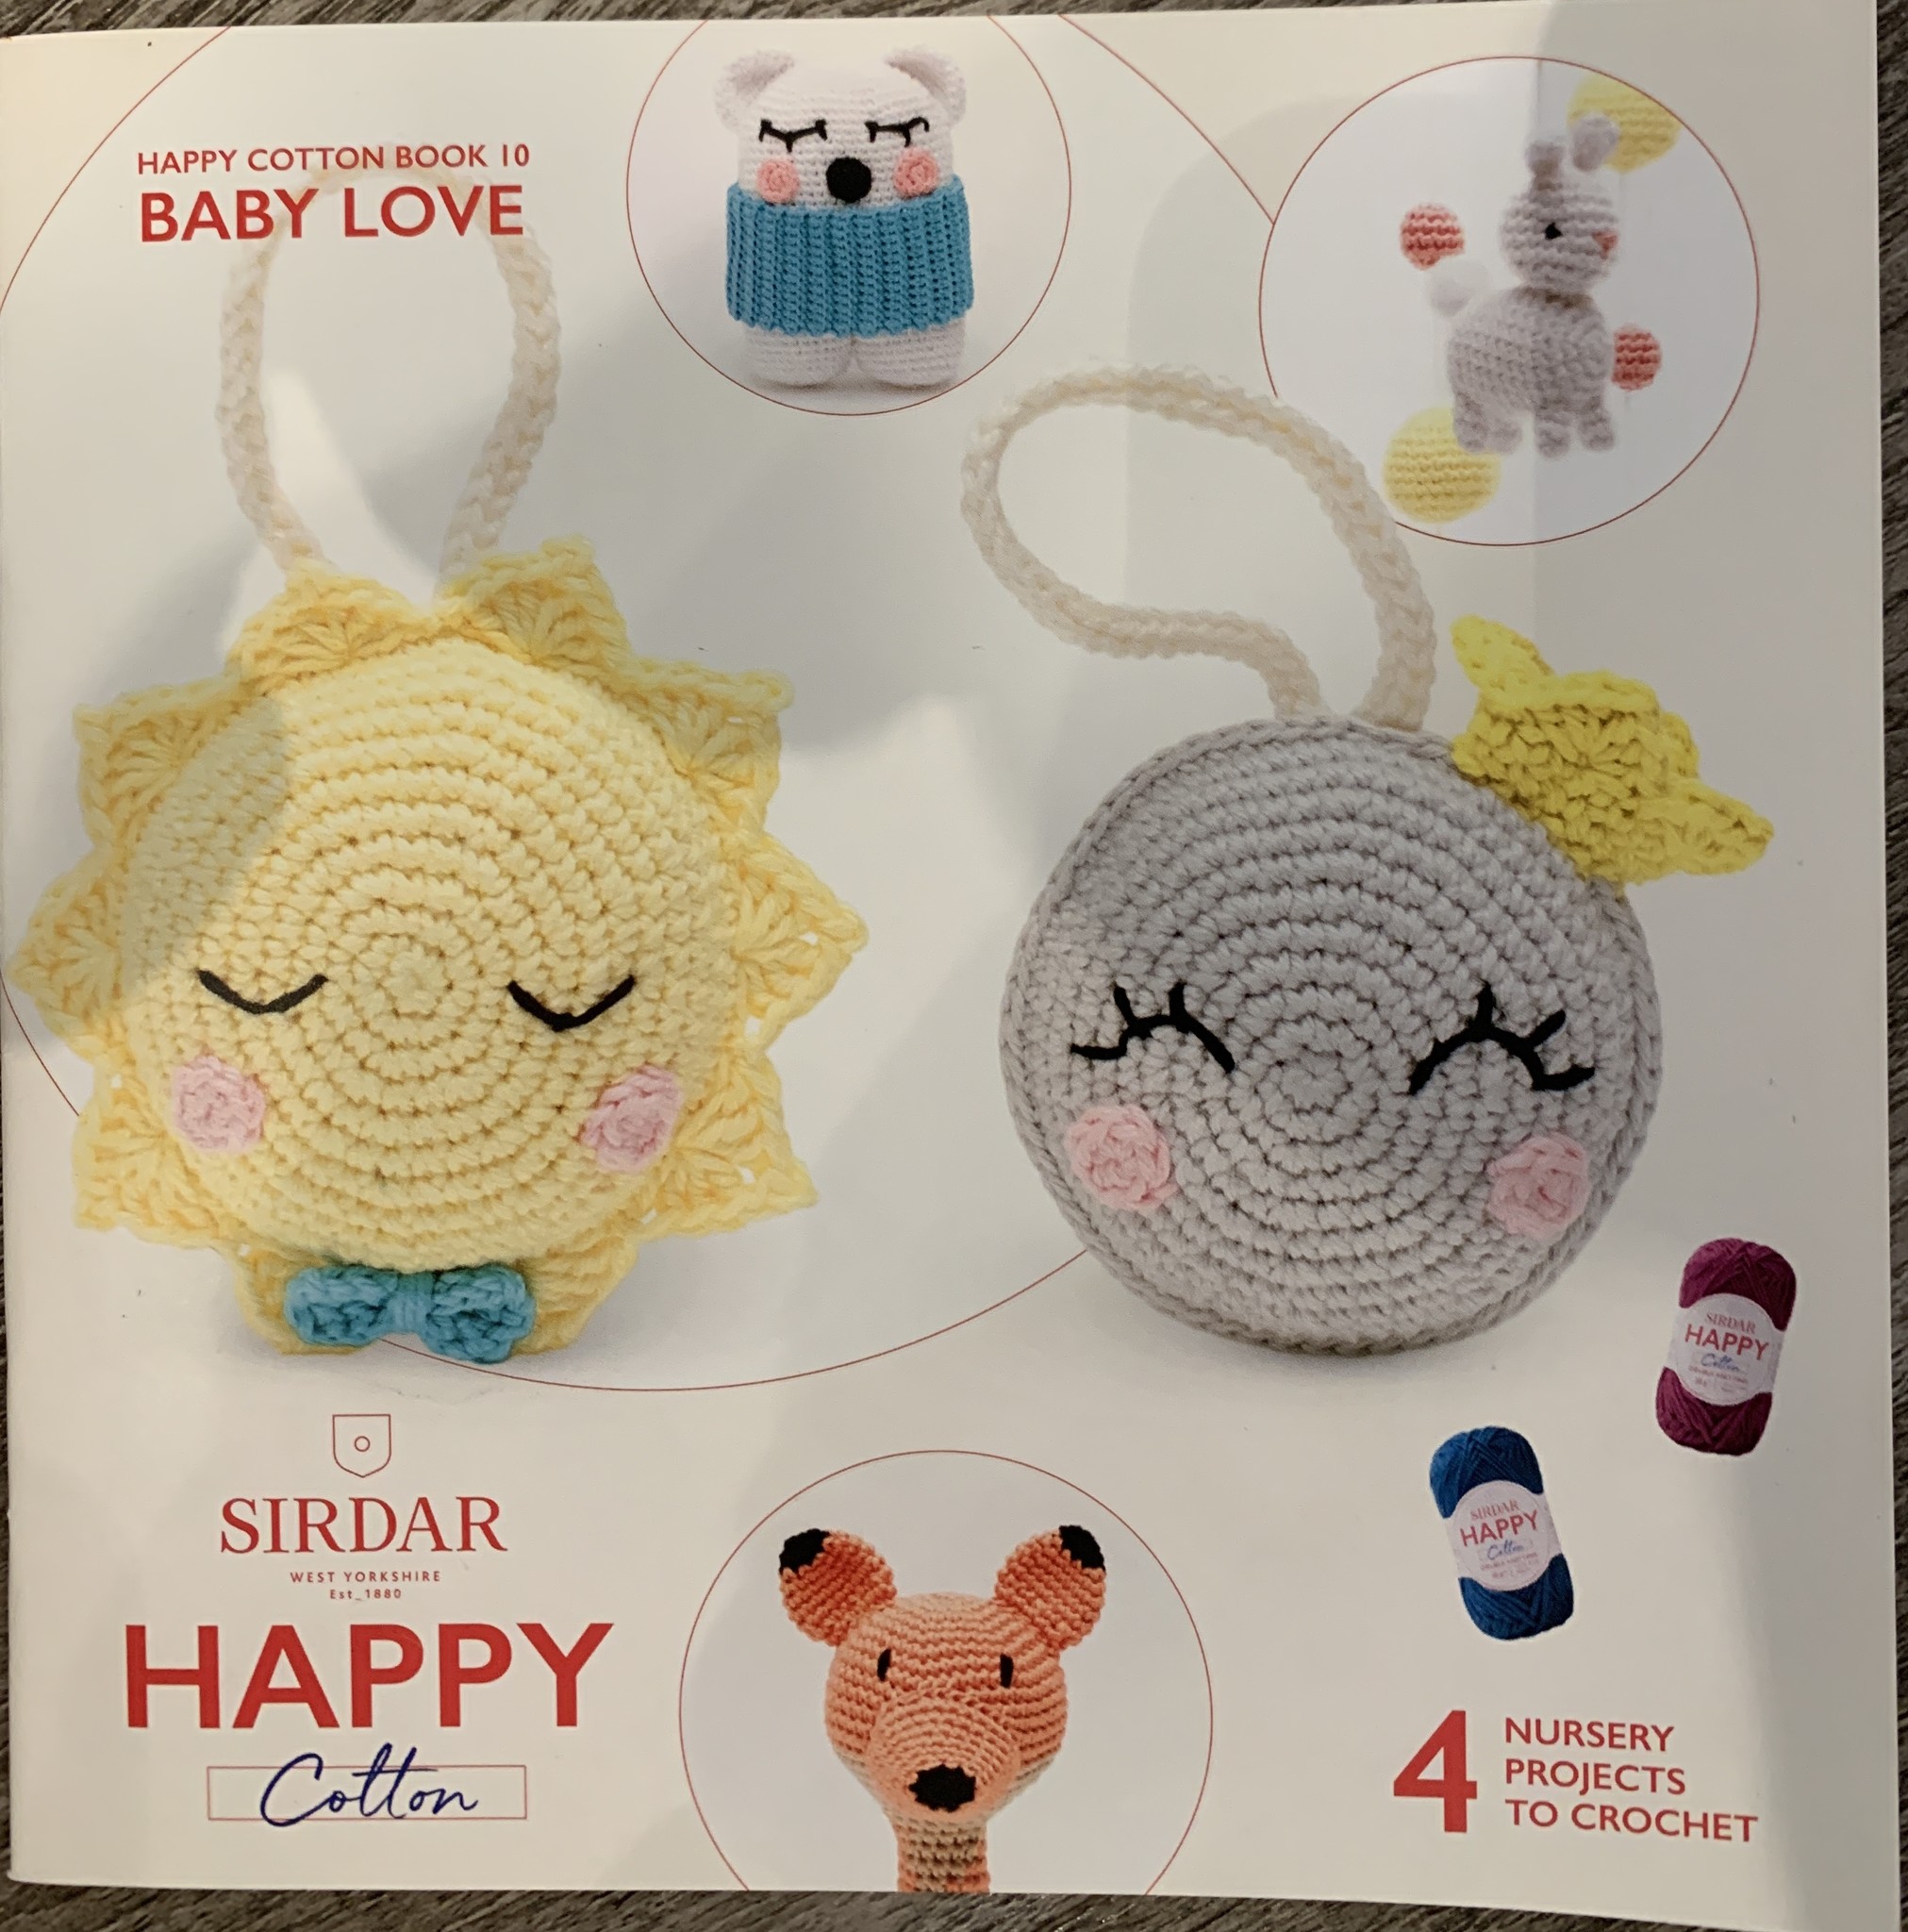 Sirdar Happy Cotton Crochet Pattern Books - Spin Me A Yarn